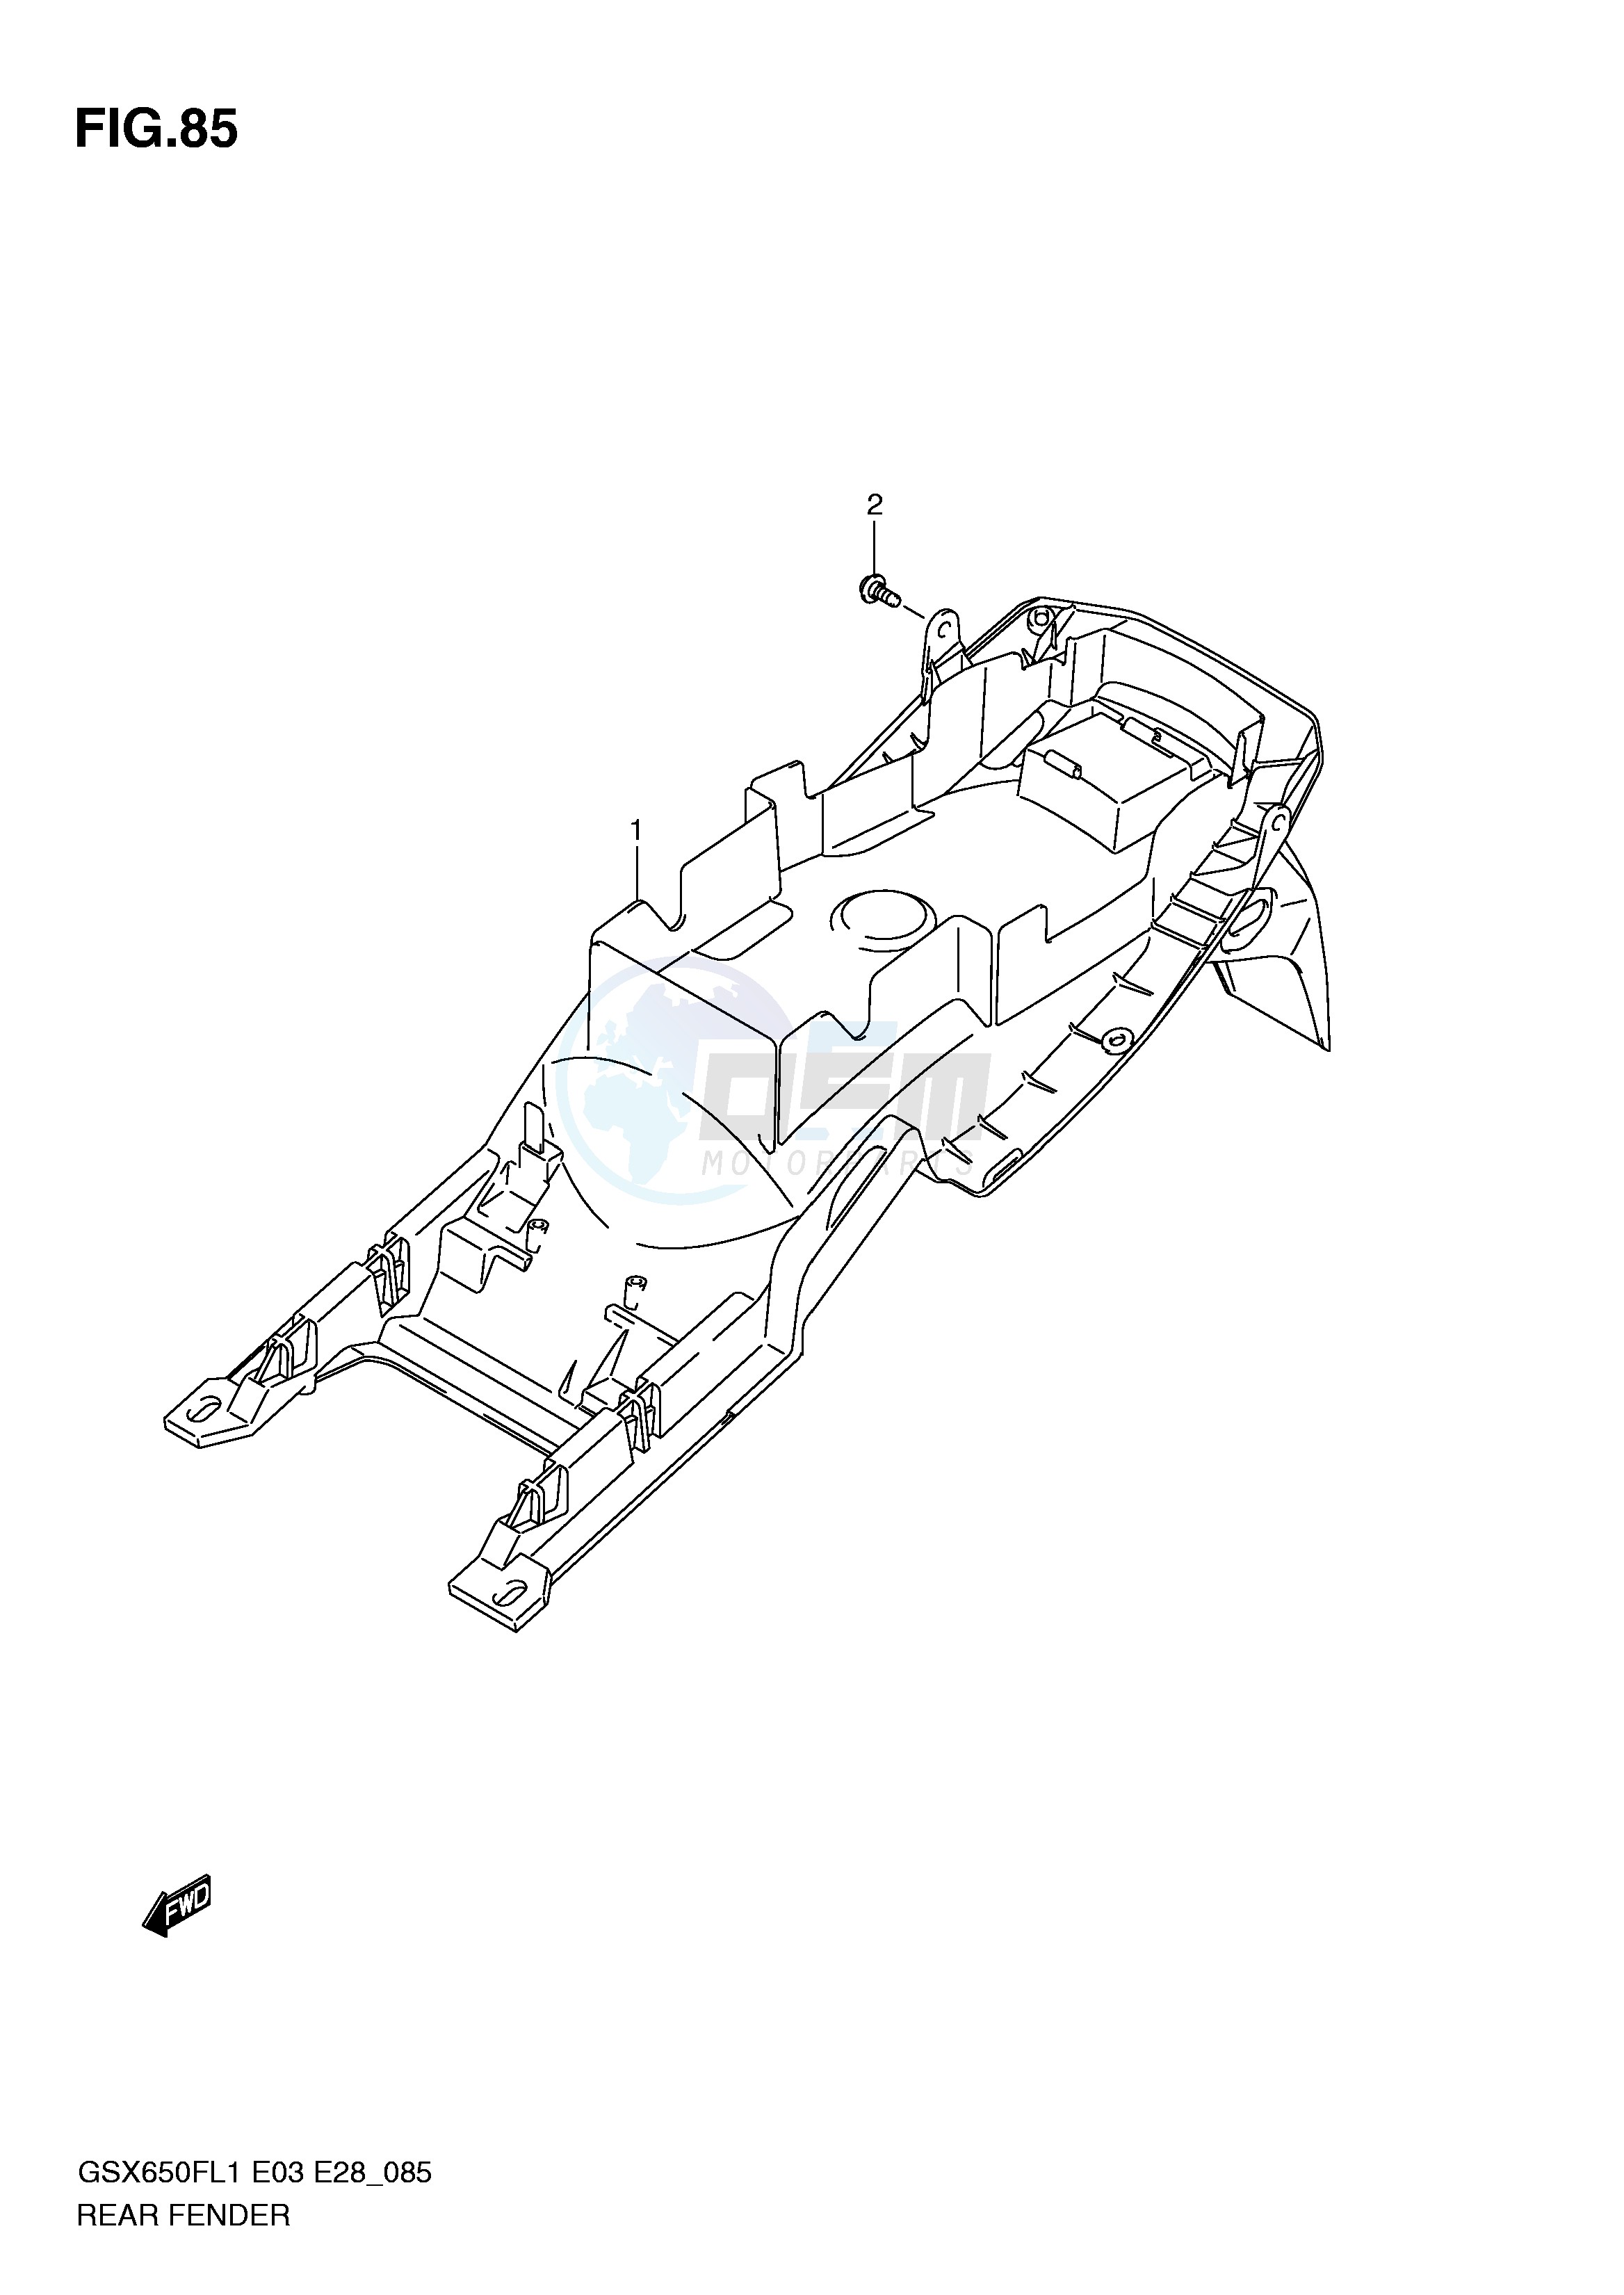 REAR FENDER (GSX650FAL1 E33) blueprint